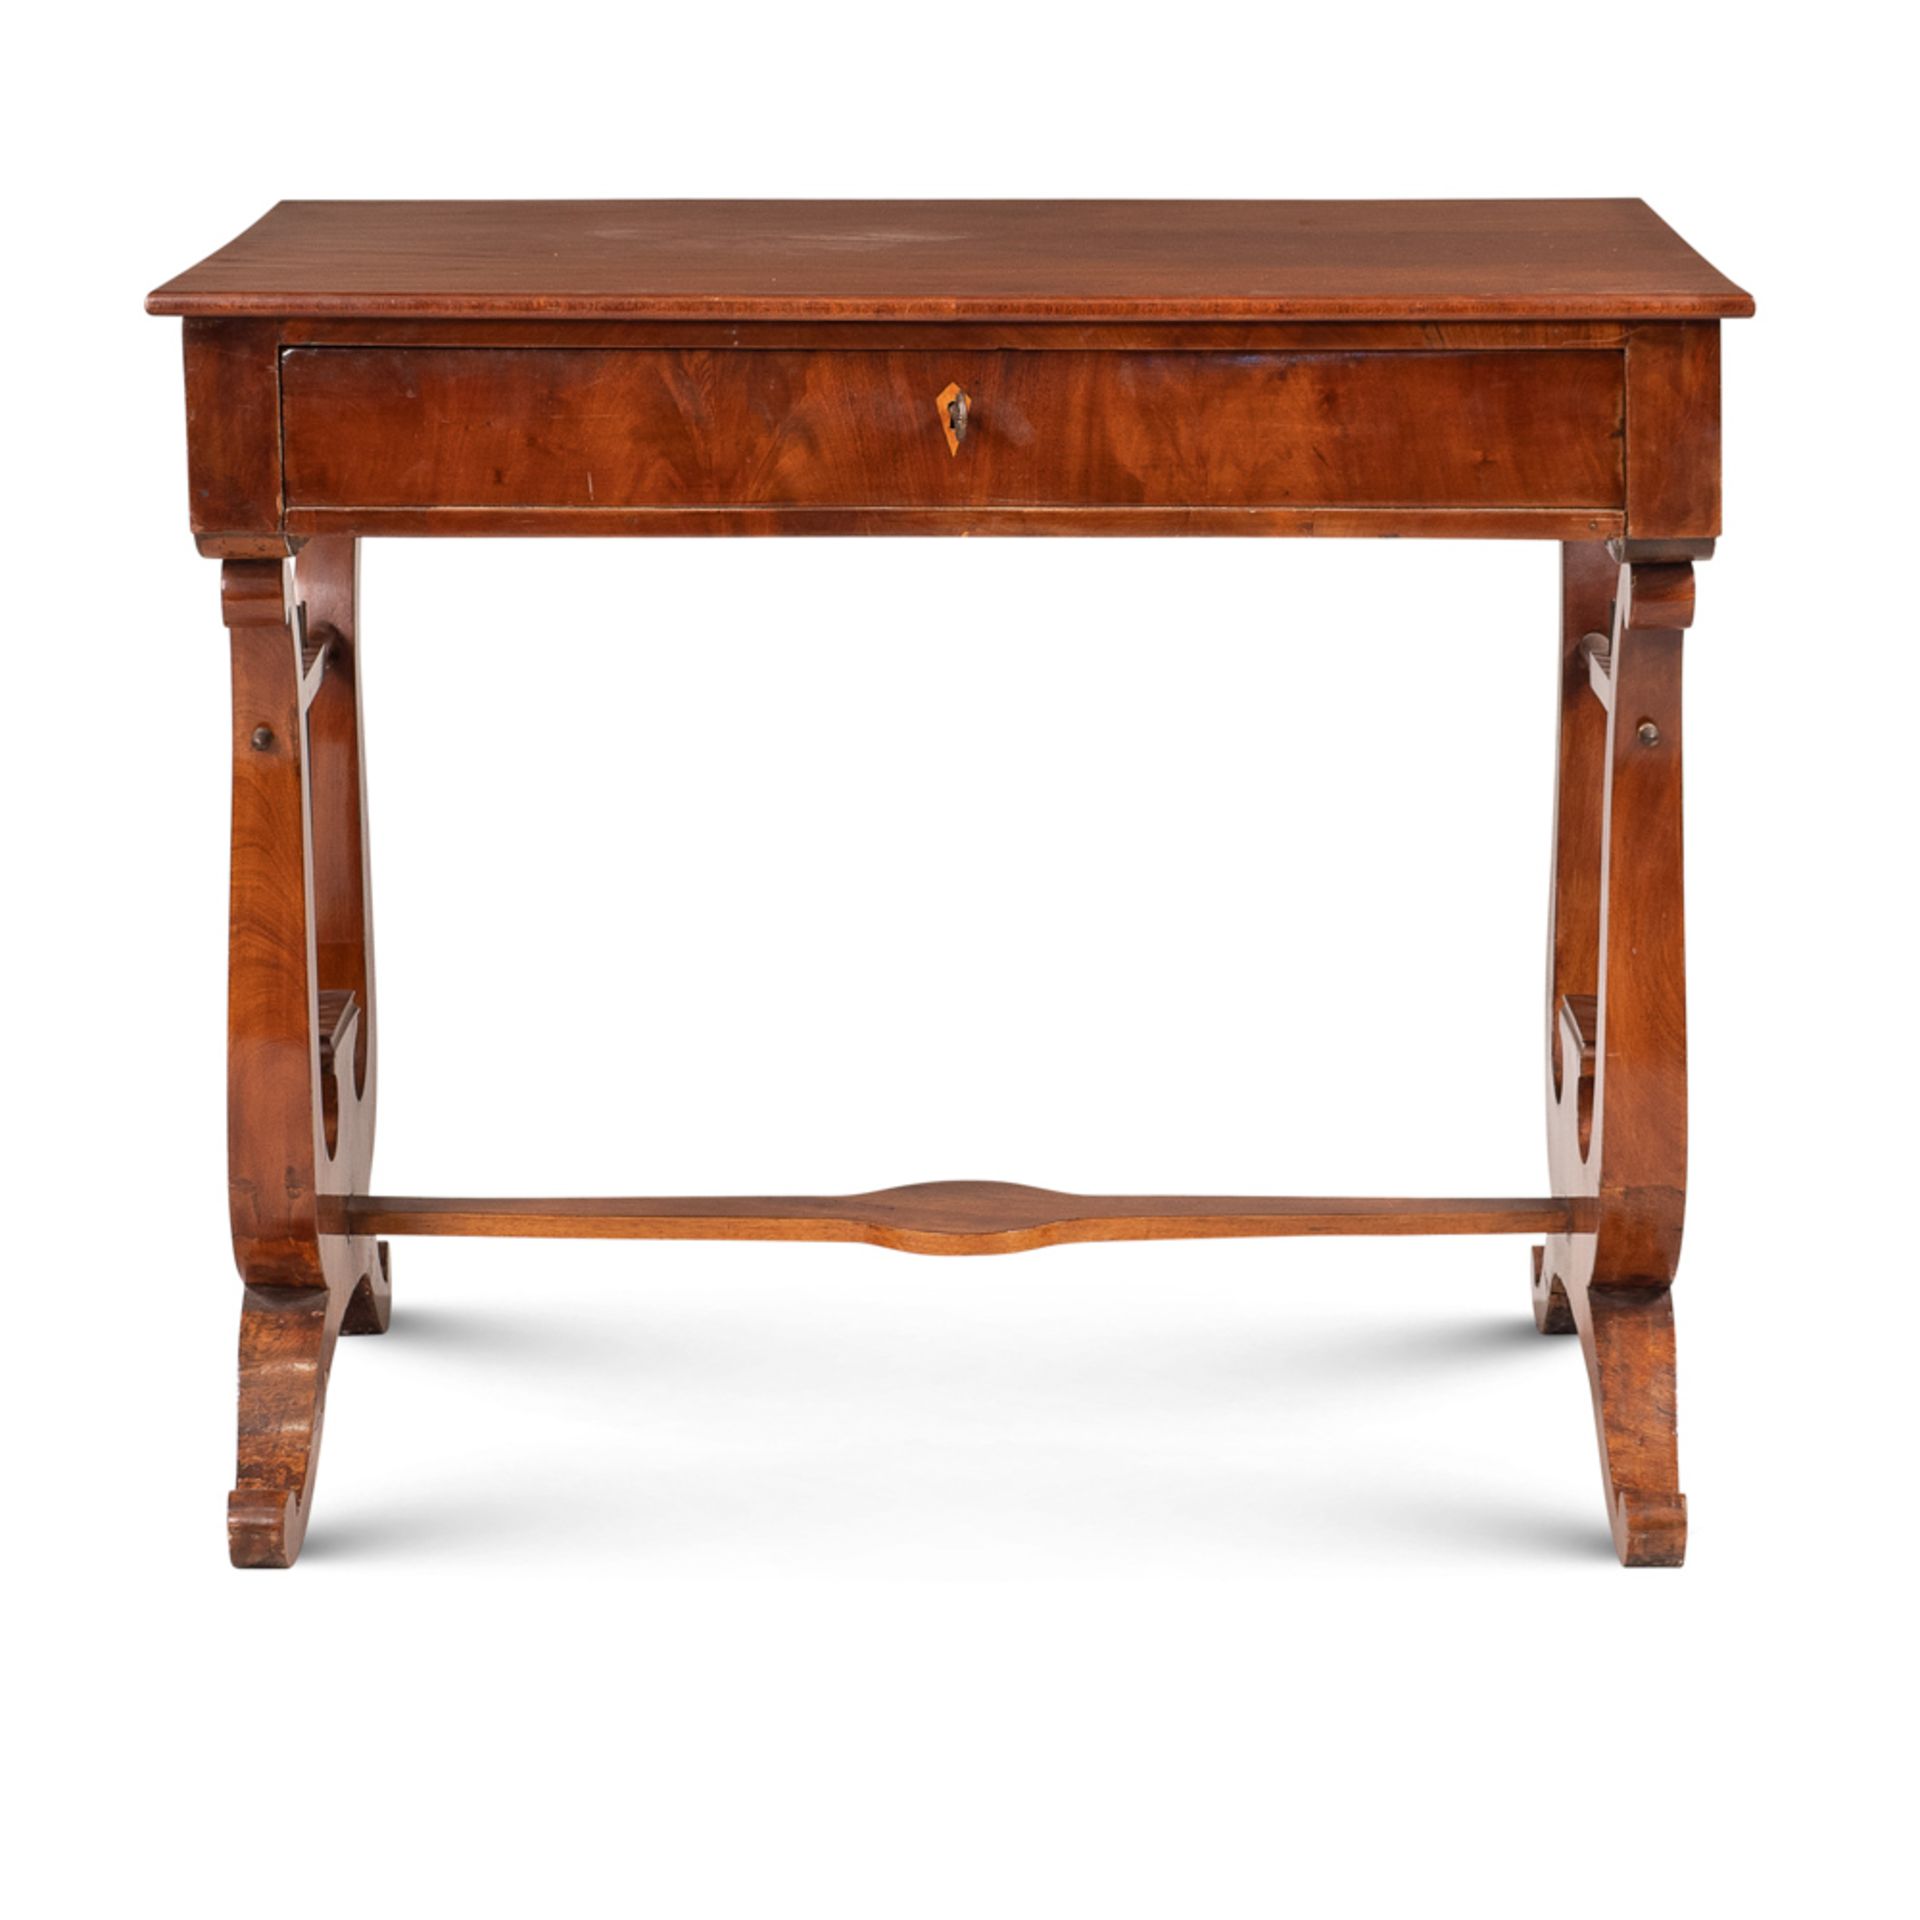 Mahogany bureau desk England, 19th century 77x93x61 cm.